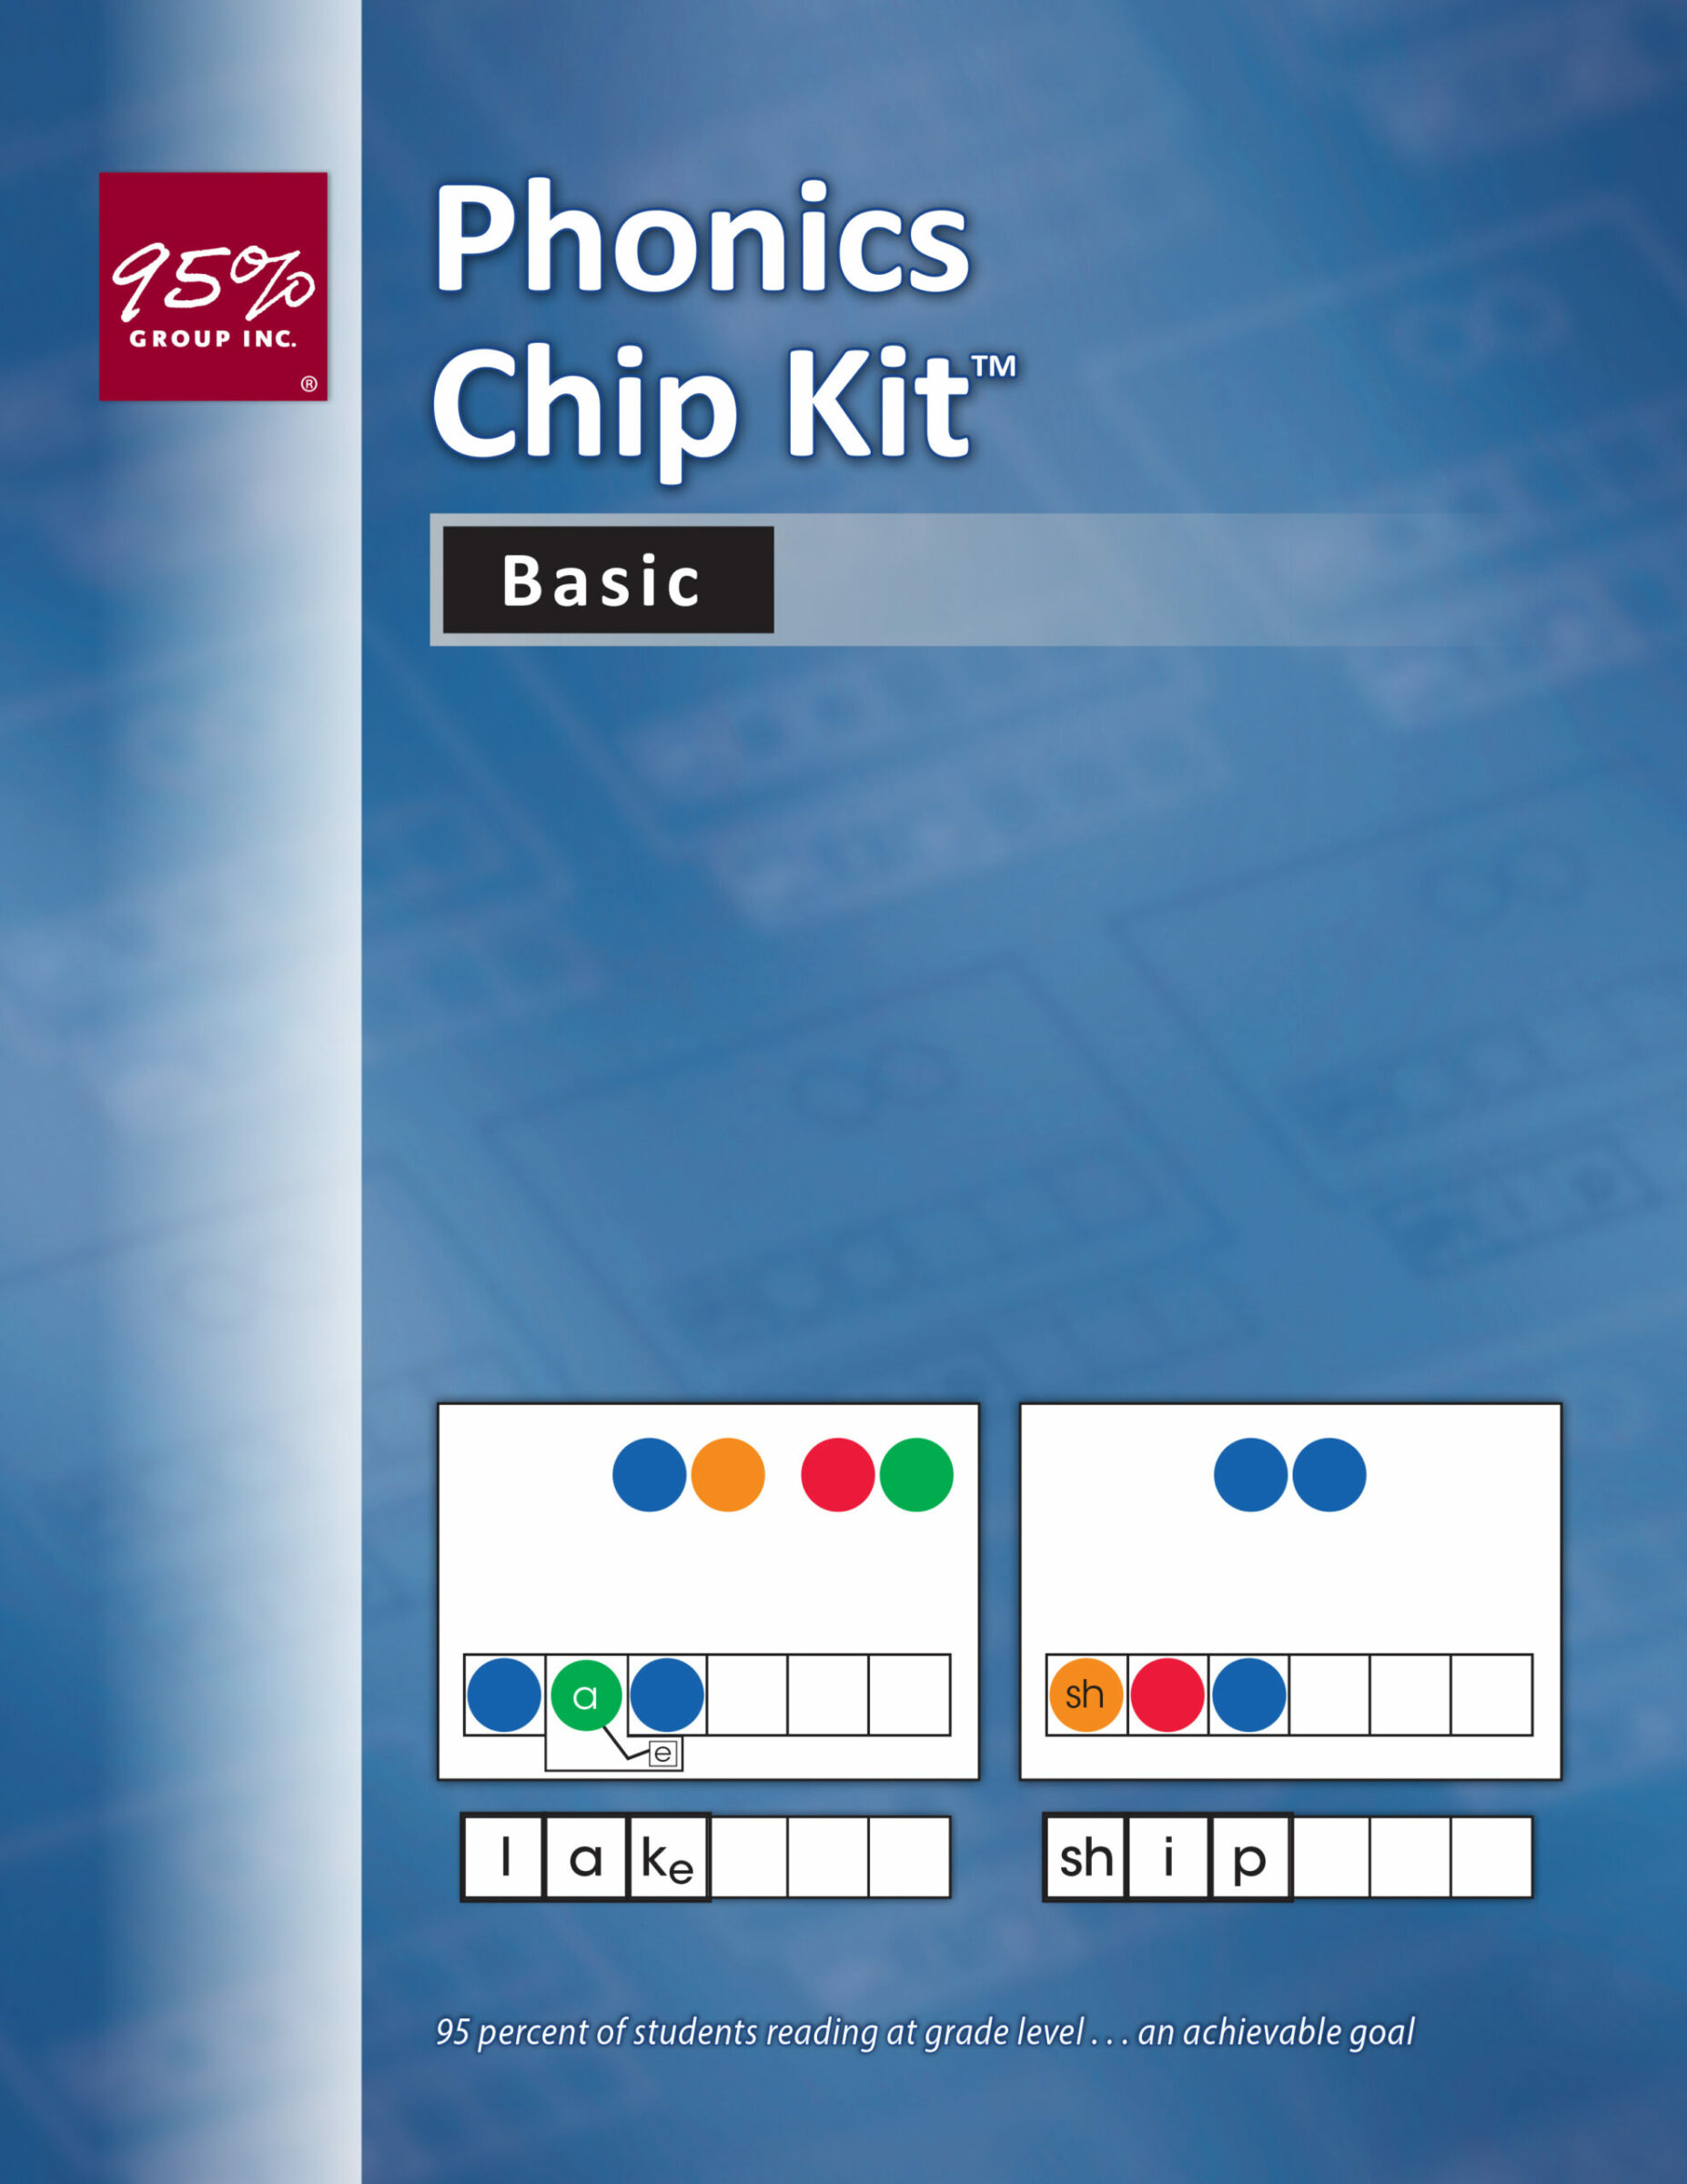 Book cover titled Phonics Chip Kit Basic.